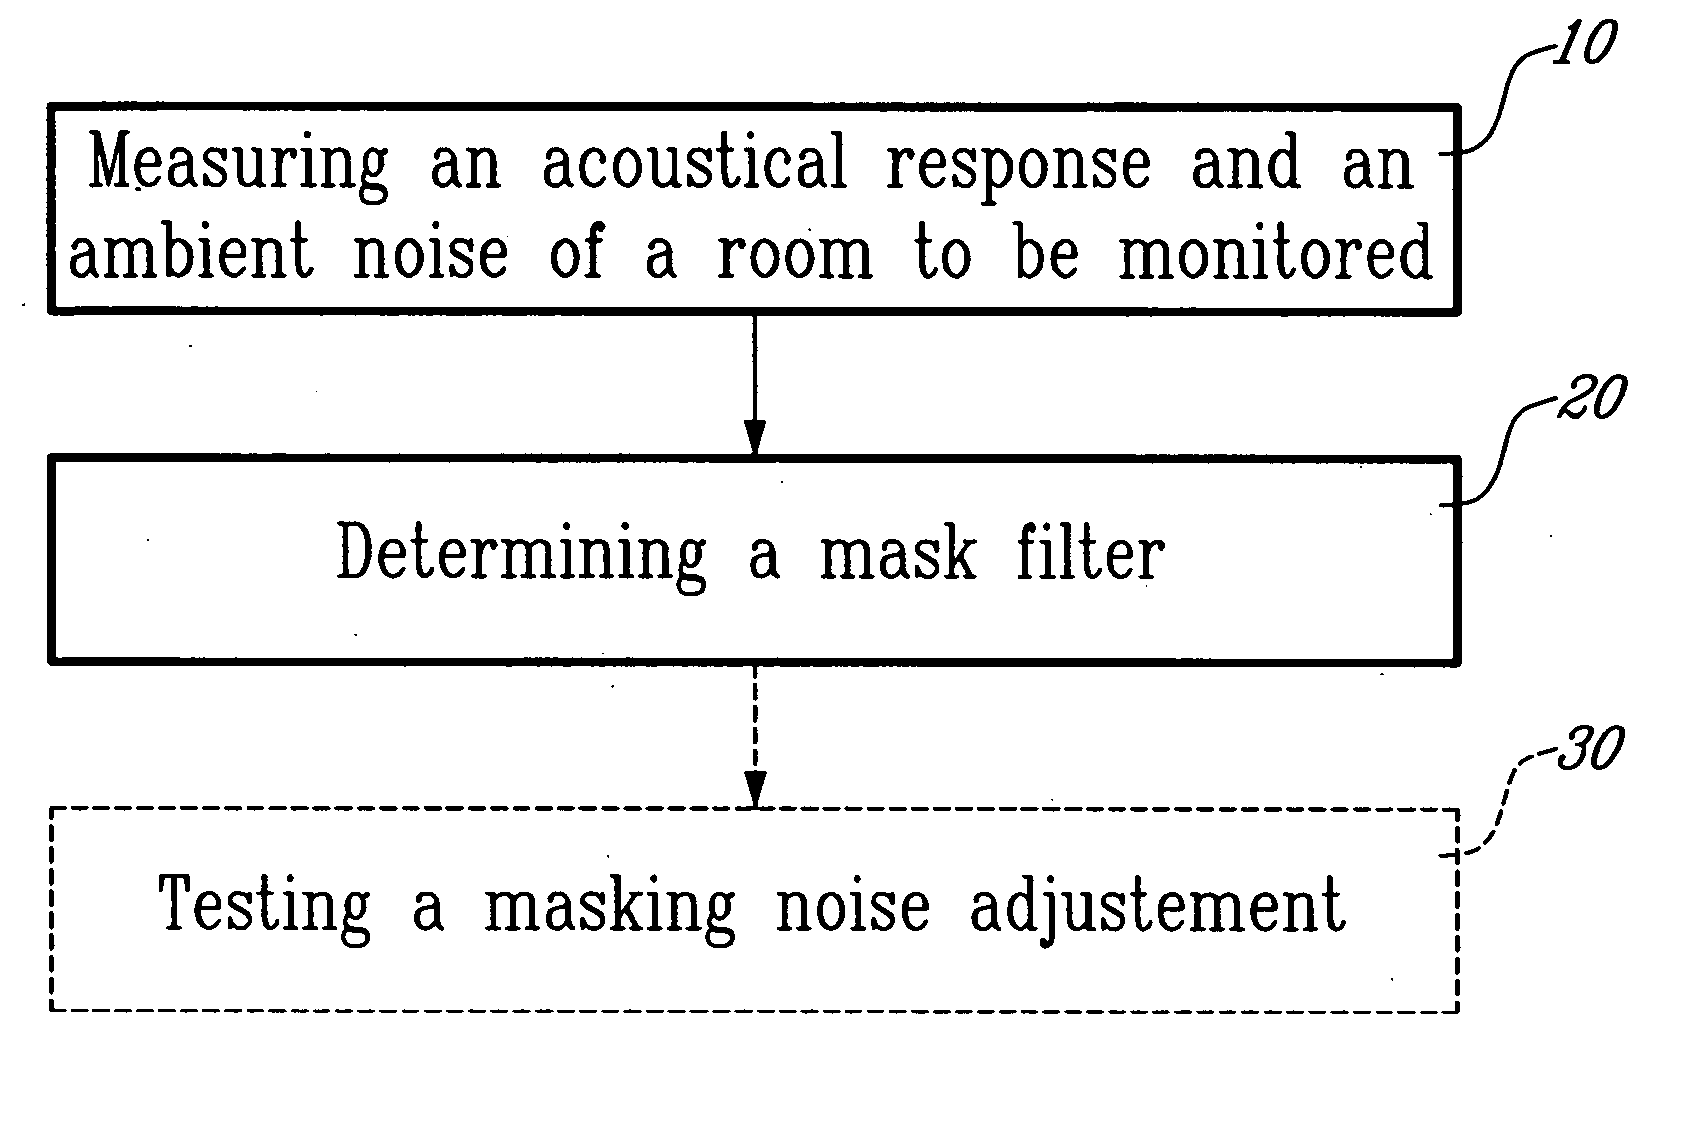 Auto-adjusting sound masking system and method